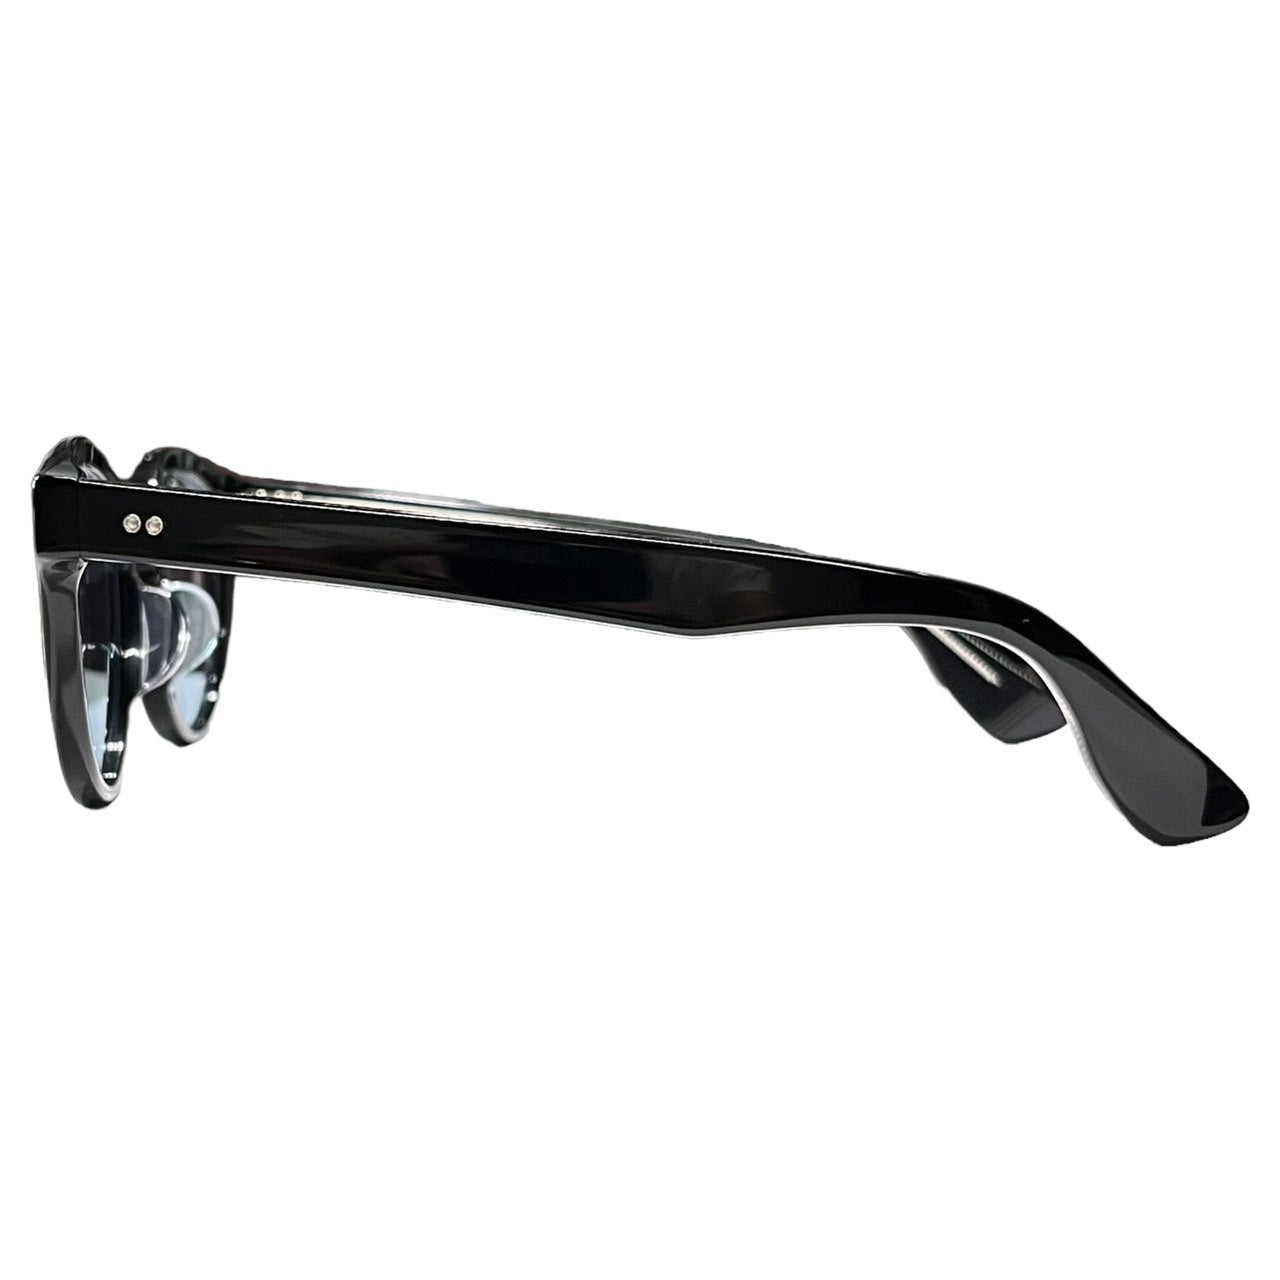 AUDIENCE(オーディエンス) cell frame sunglasses セルフレーム サングラス 金子眼鏡 KANEKO OPTICAL AUS-018 ブラック×ライトブルー ケース付属